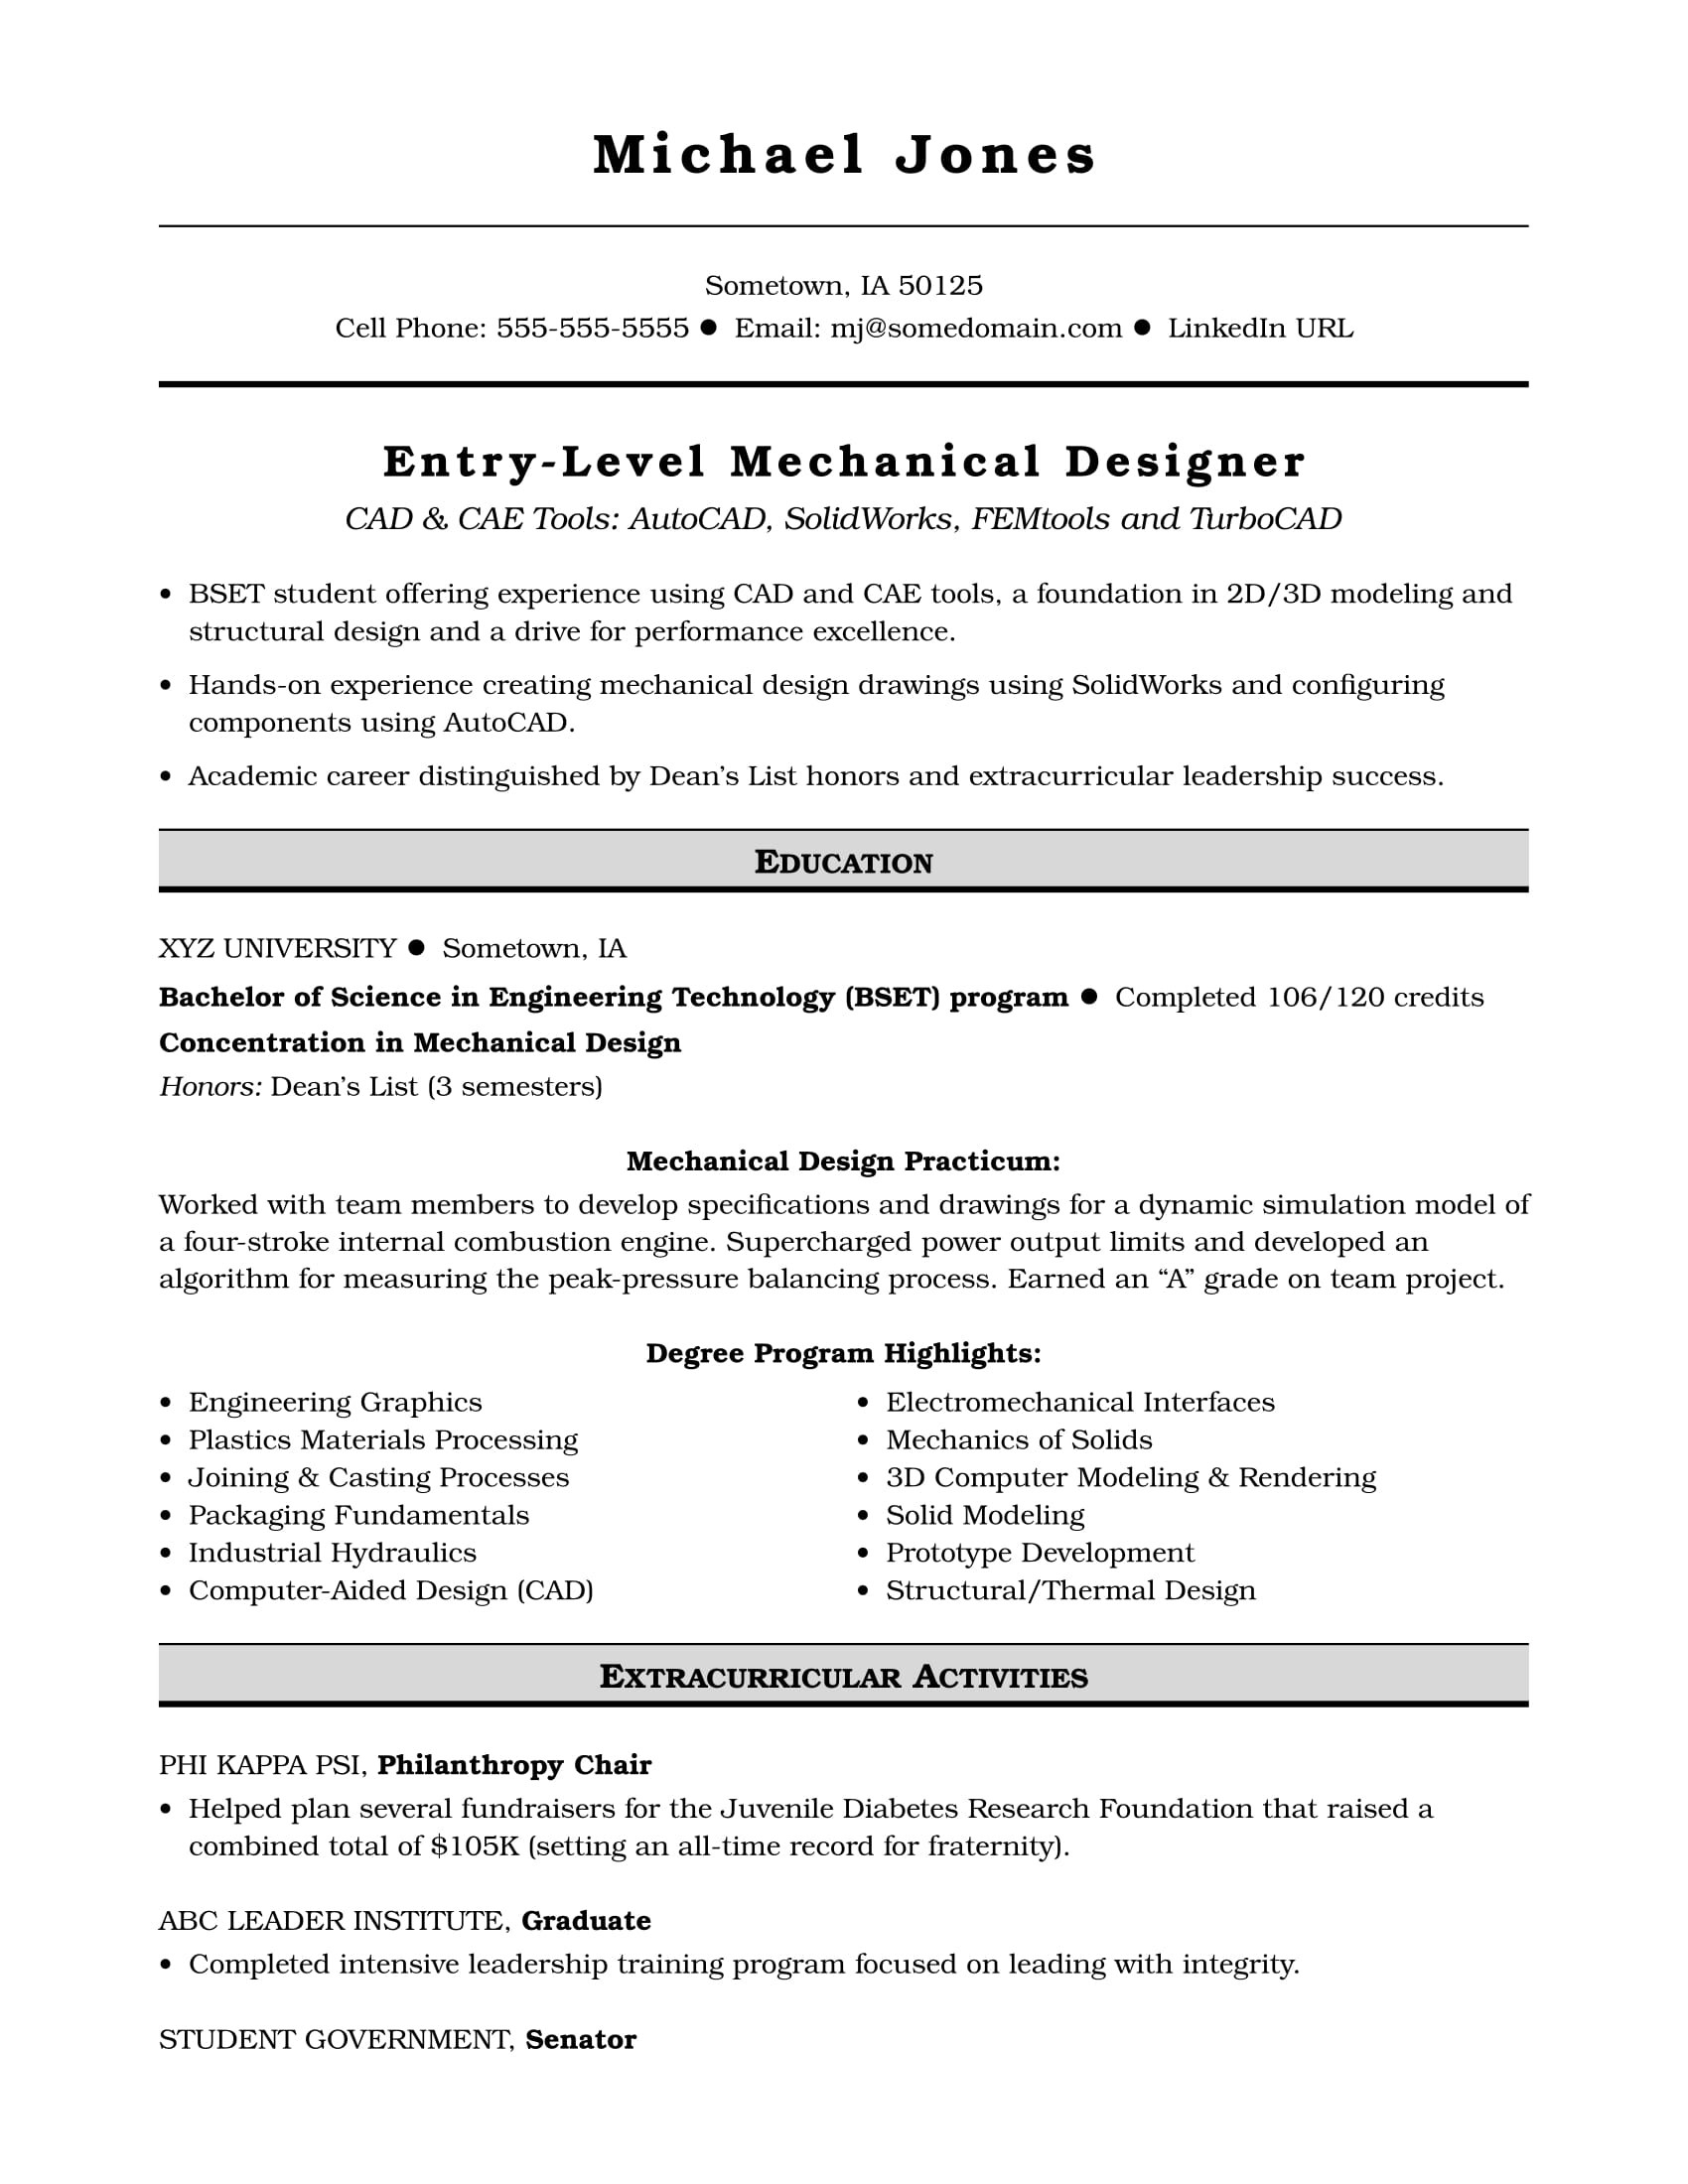 Sample Resume with Comp Ia Credentials Sample Resume for An Entry-level Mechanical Designer Monster.com